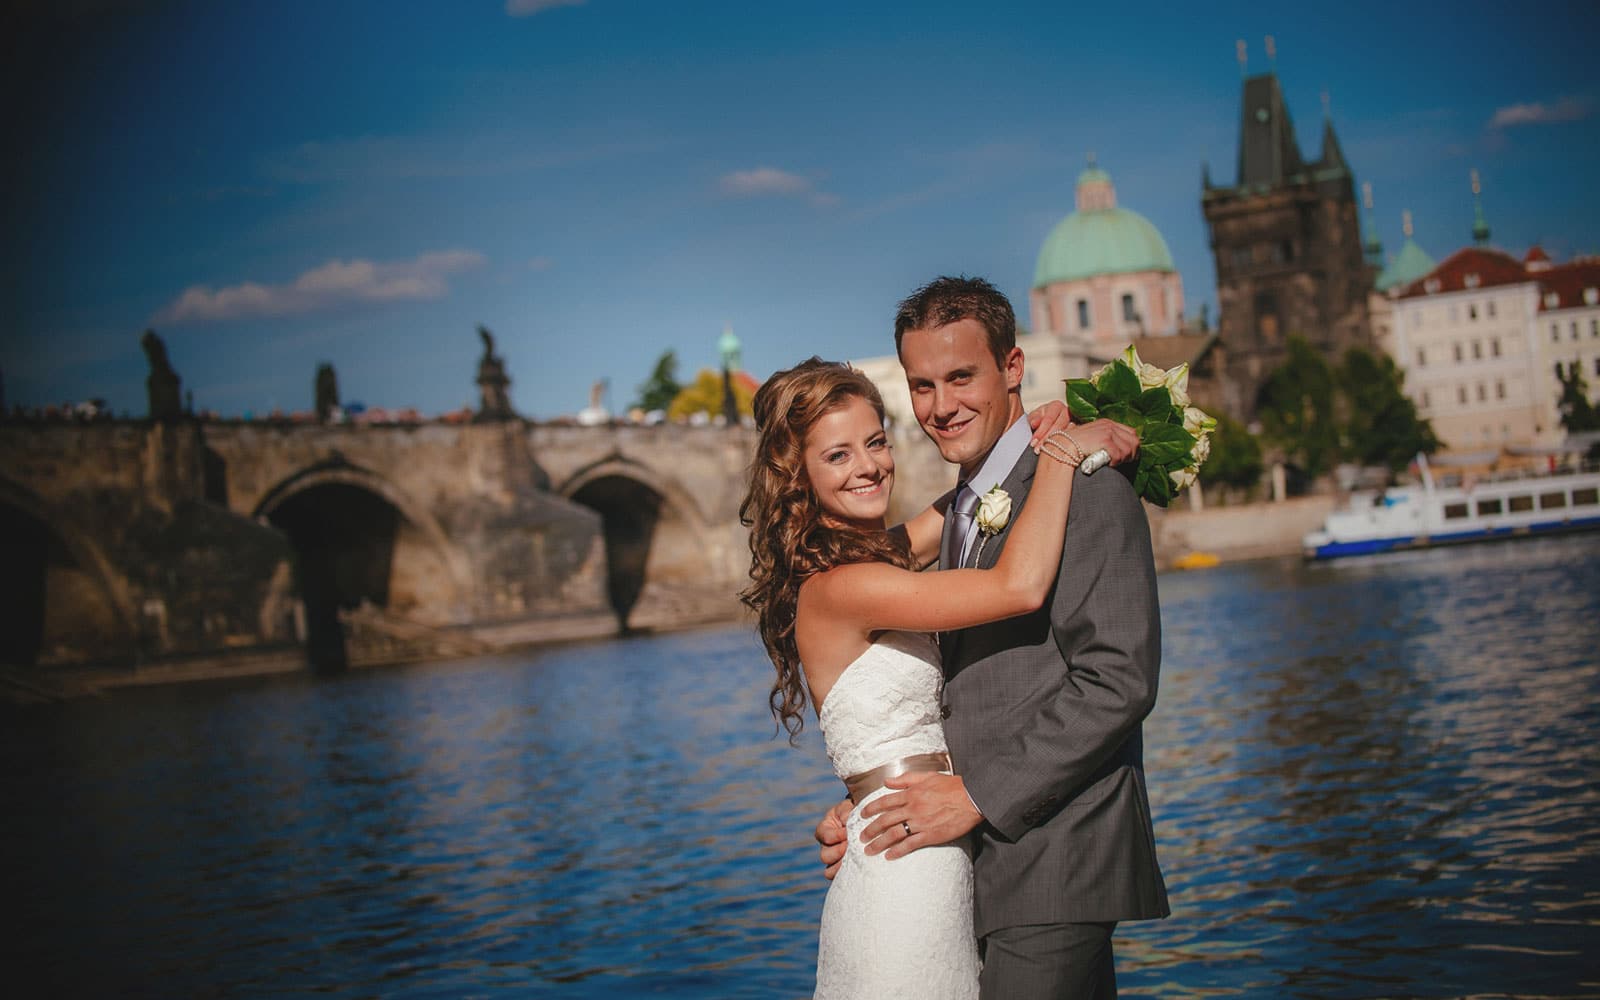 Prague wedding photographers / R&B wedding photographs near the Charles Bridge